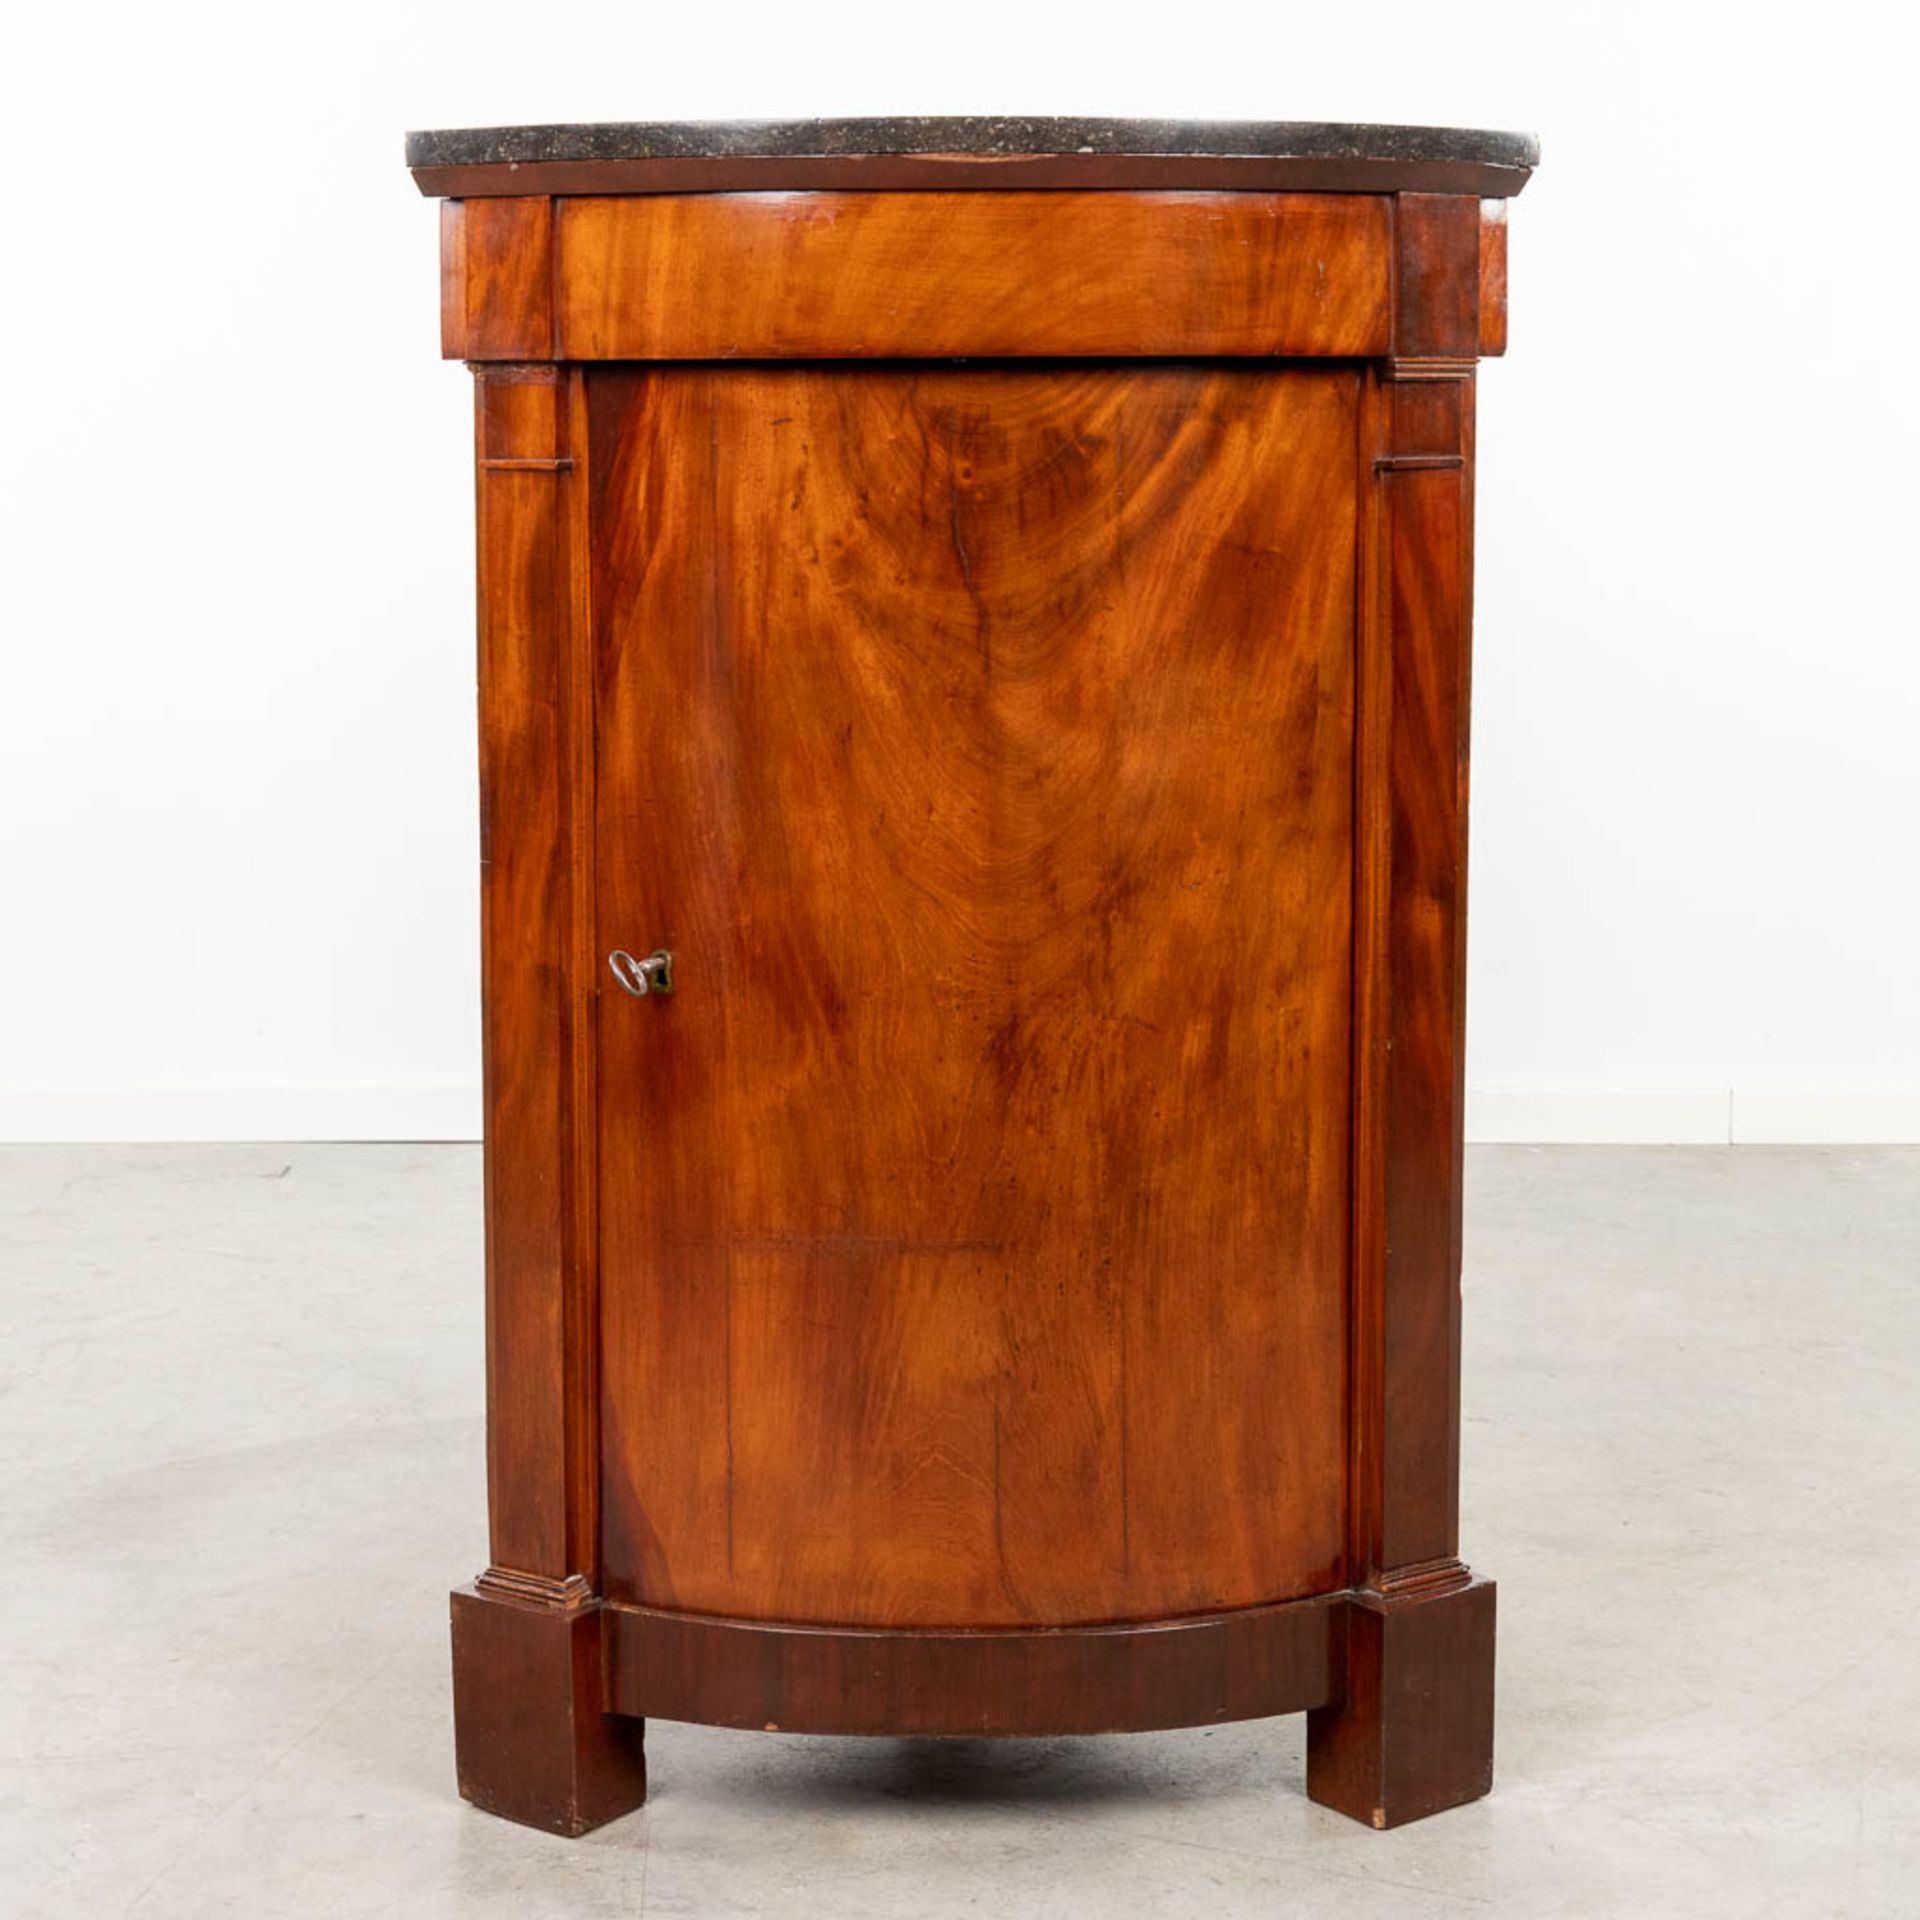 An antique corner cabinet with veneer. Empire period (49 x 76 x 112cm)